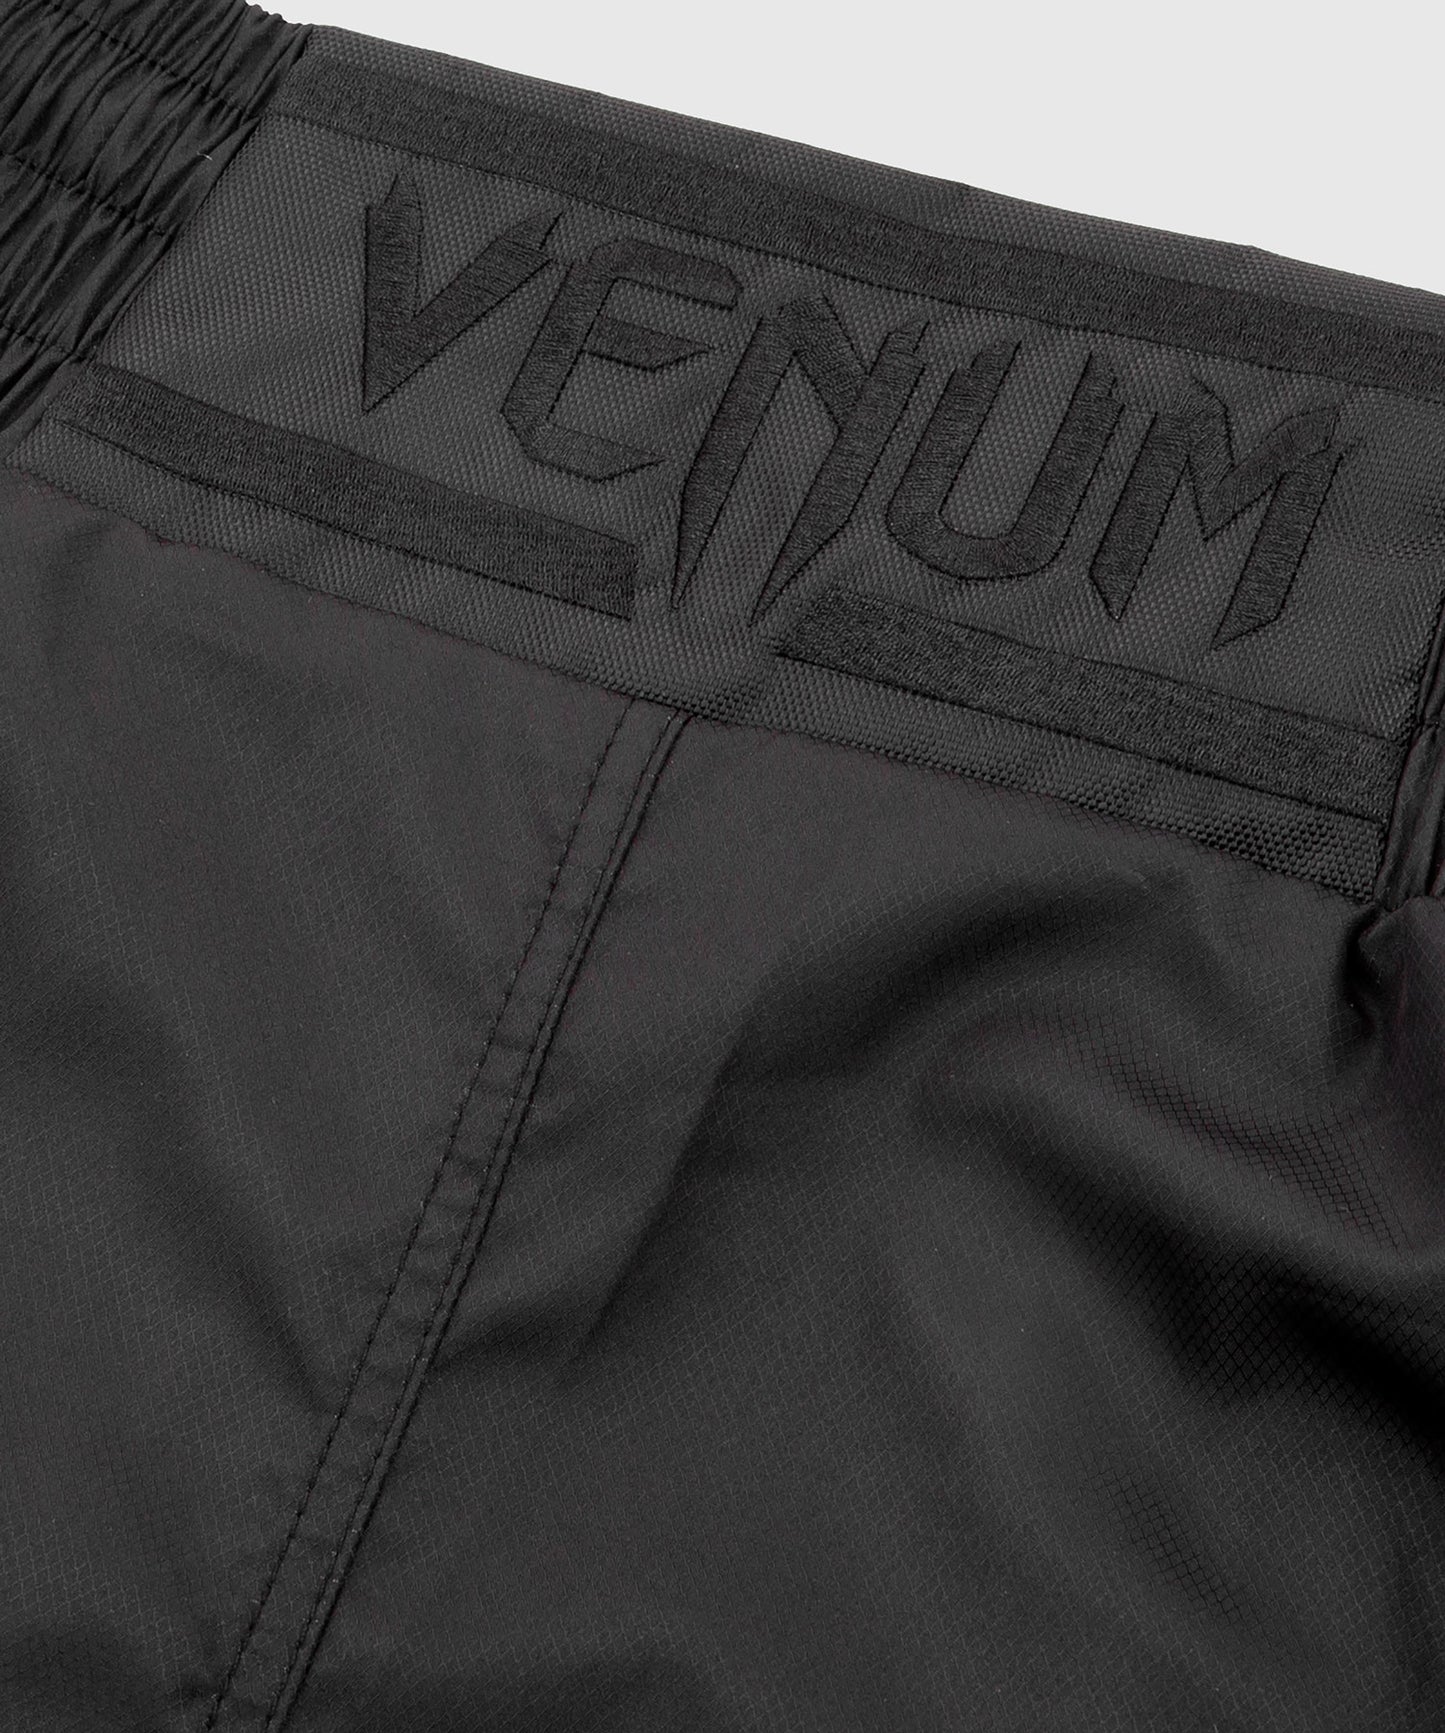 Pantalones de Boxeo Venum Elite - Negro/Negro